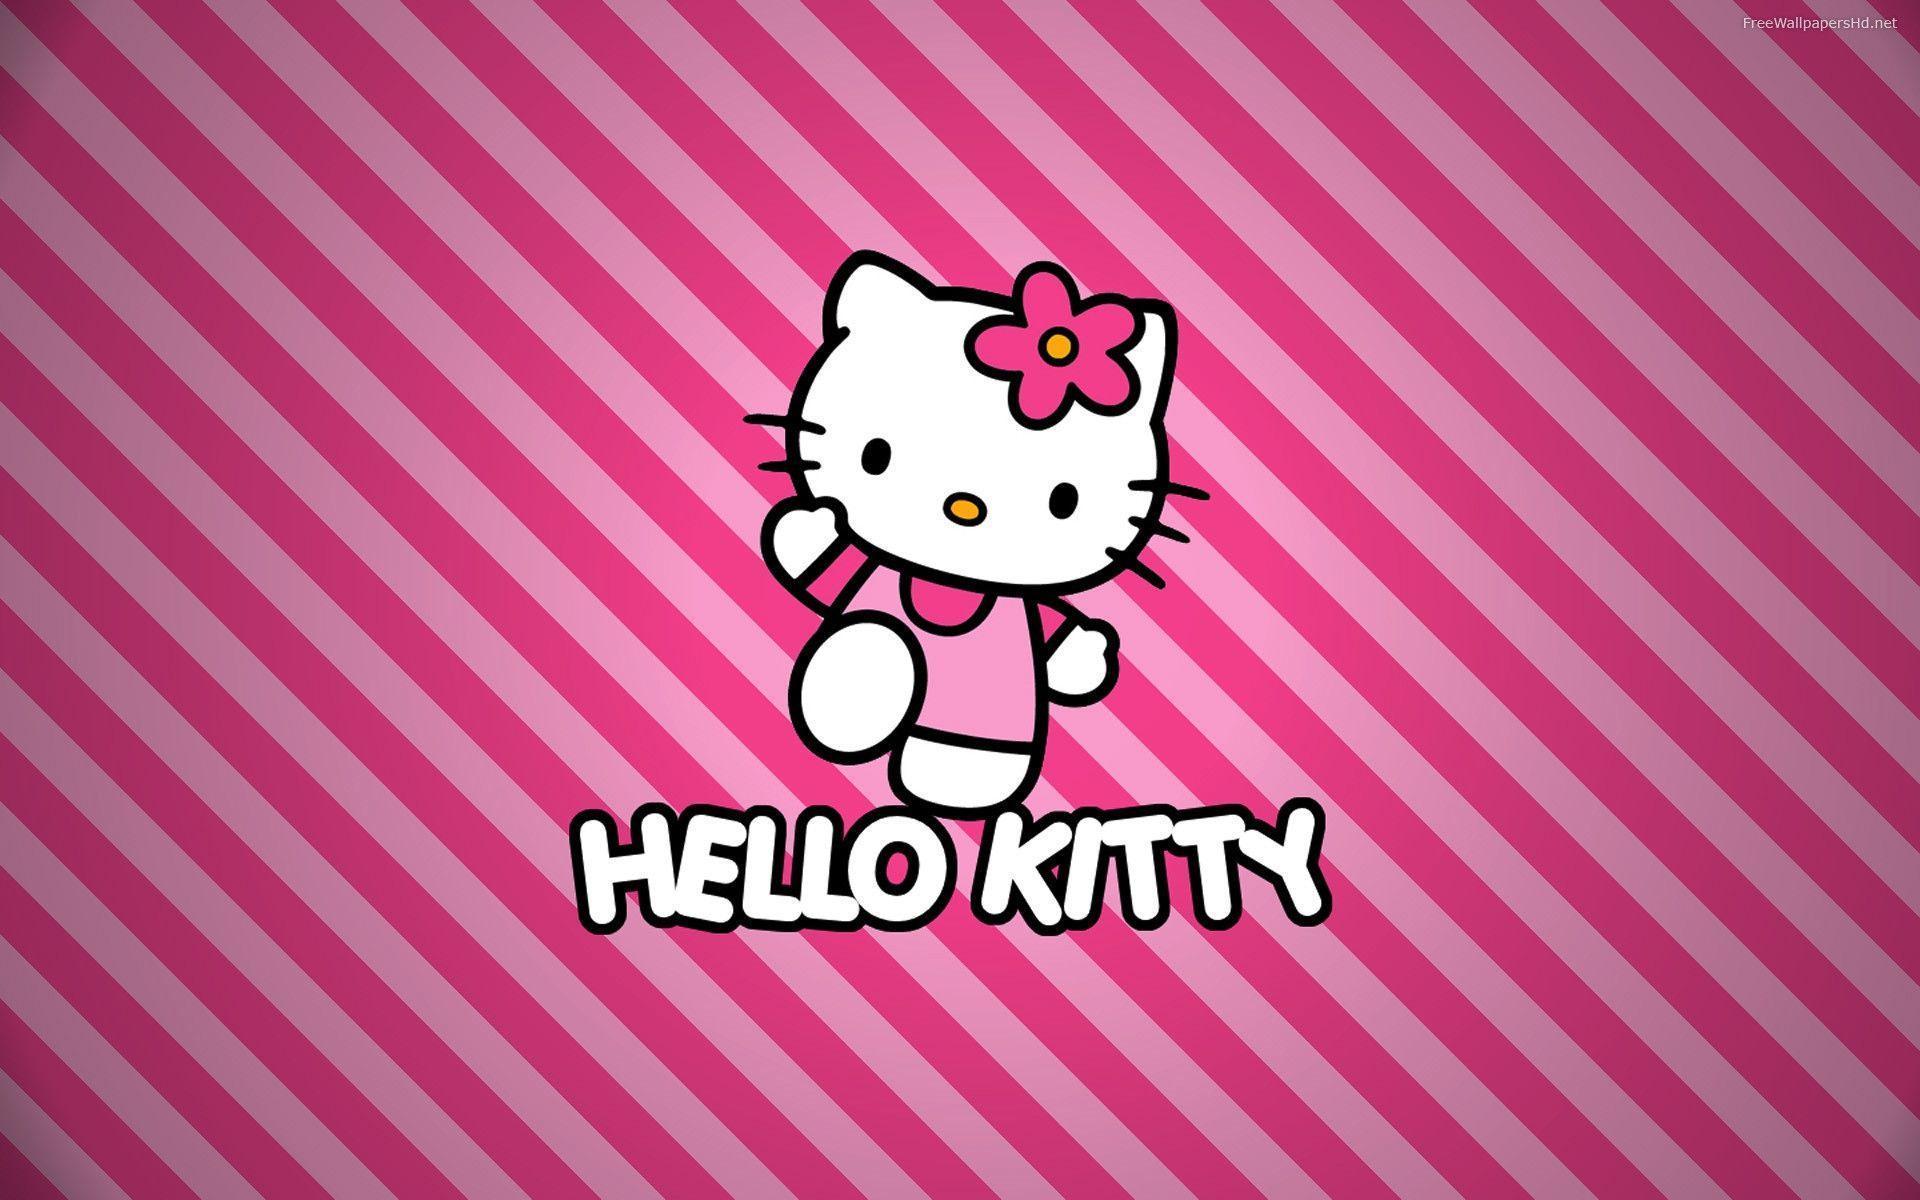 Hello Kitty Wallpaper for mobile phone, tablet, desktop computer